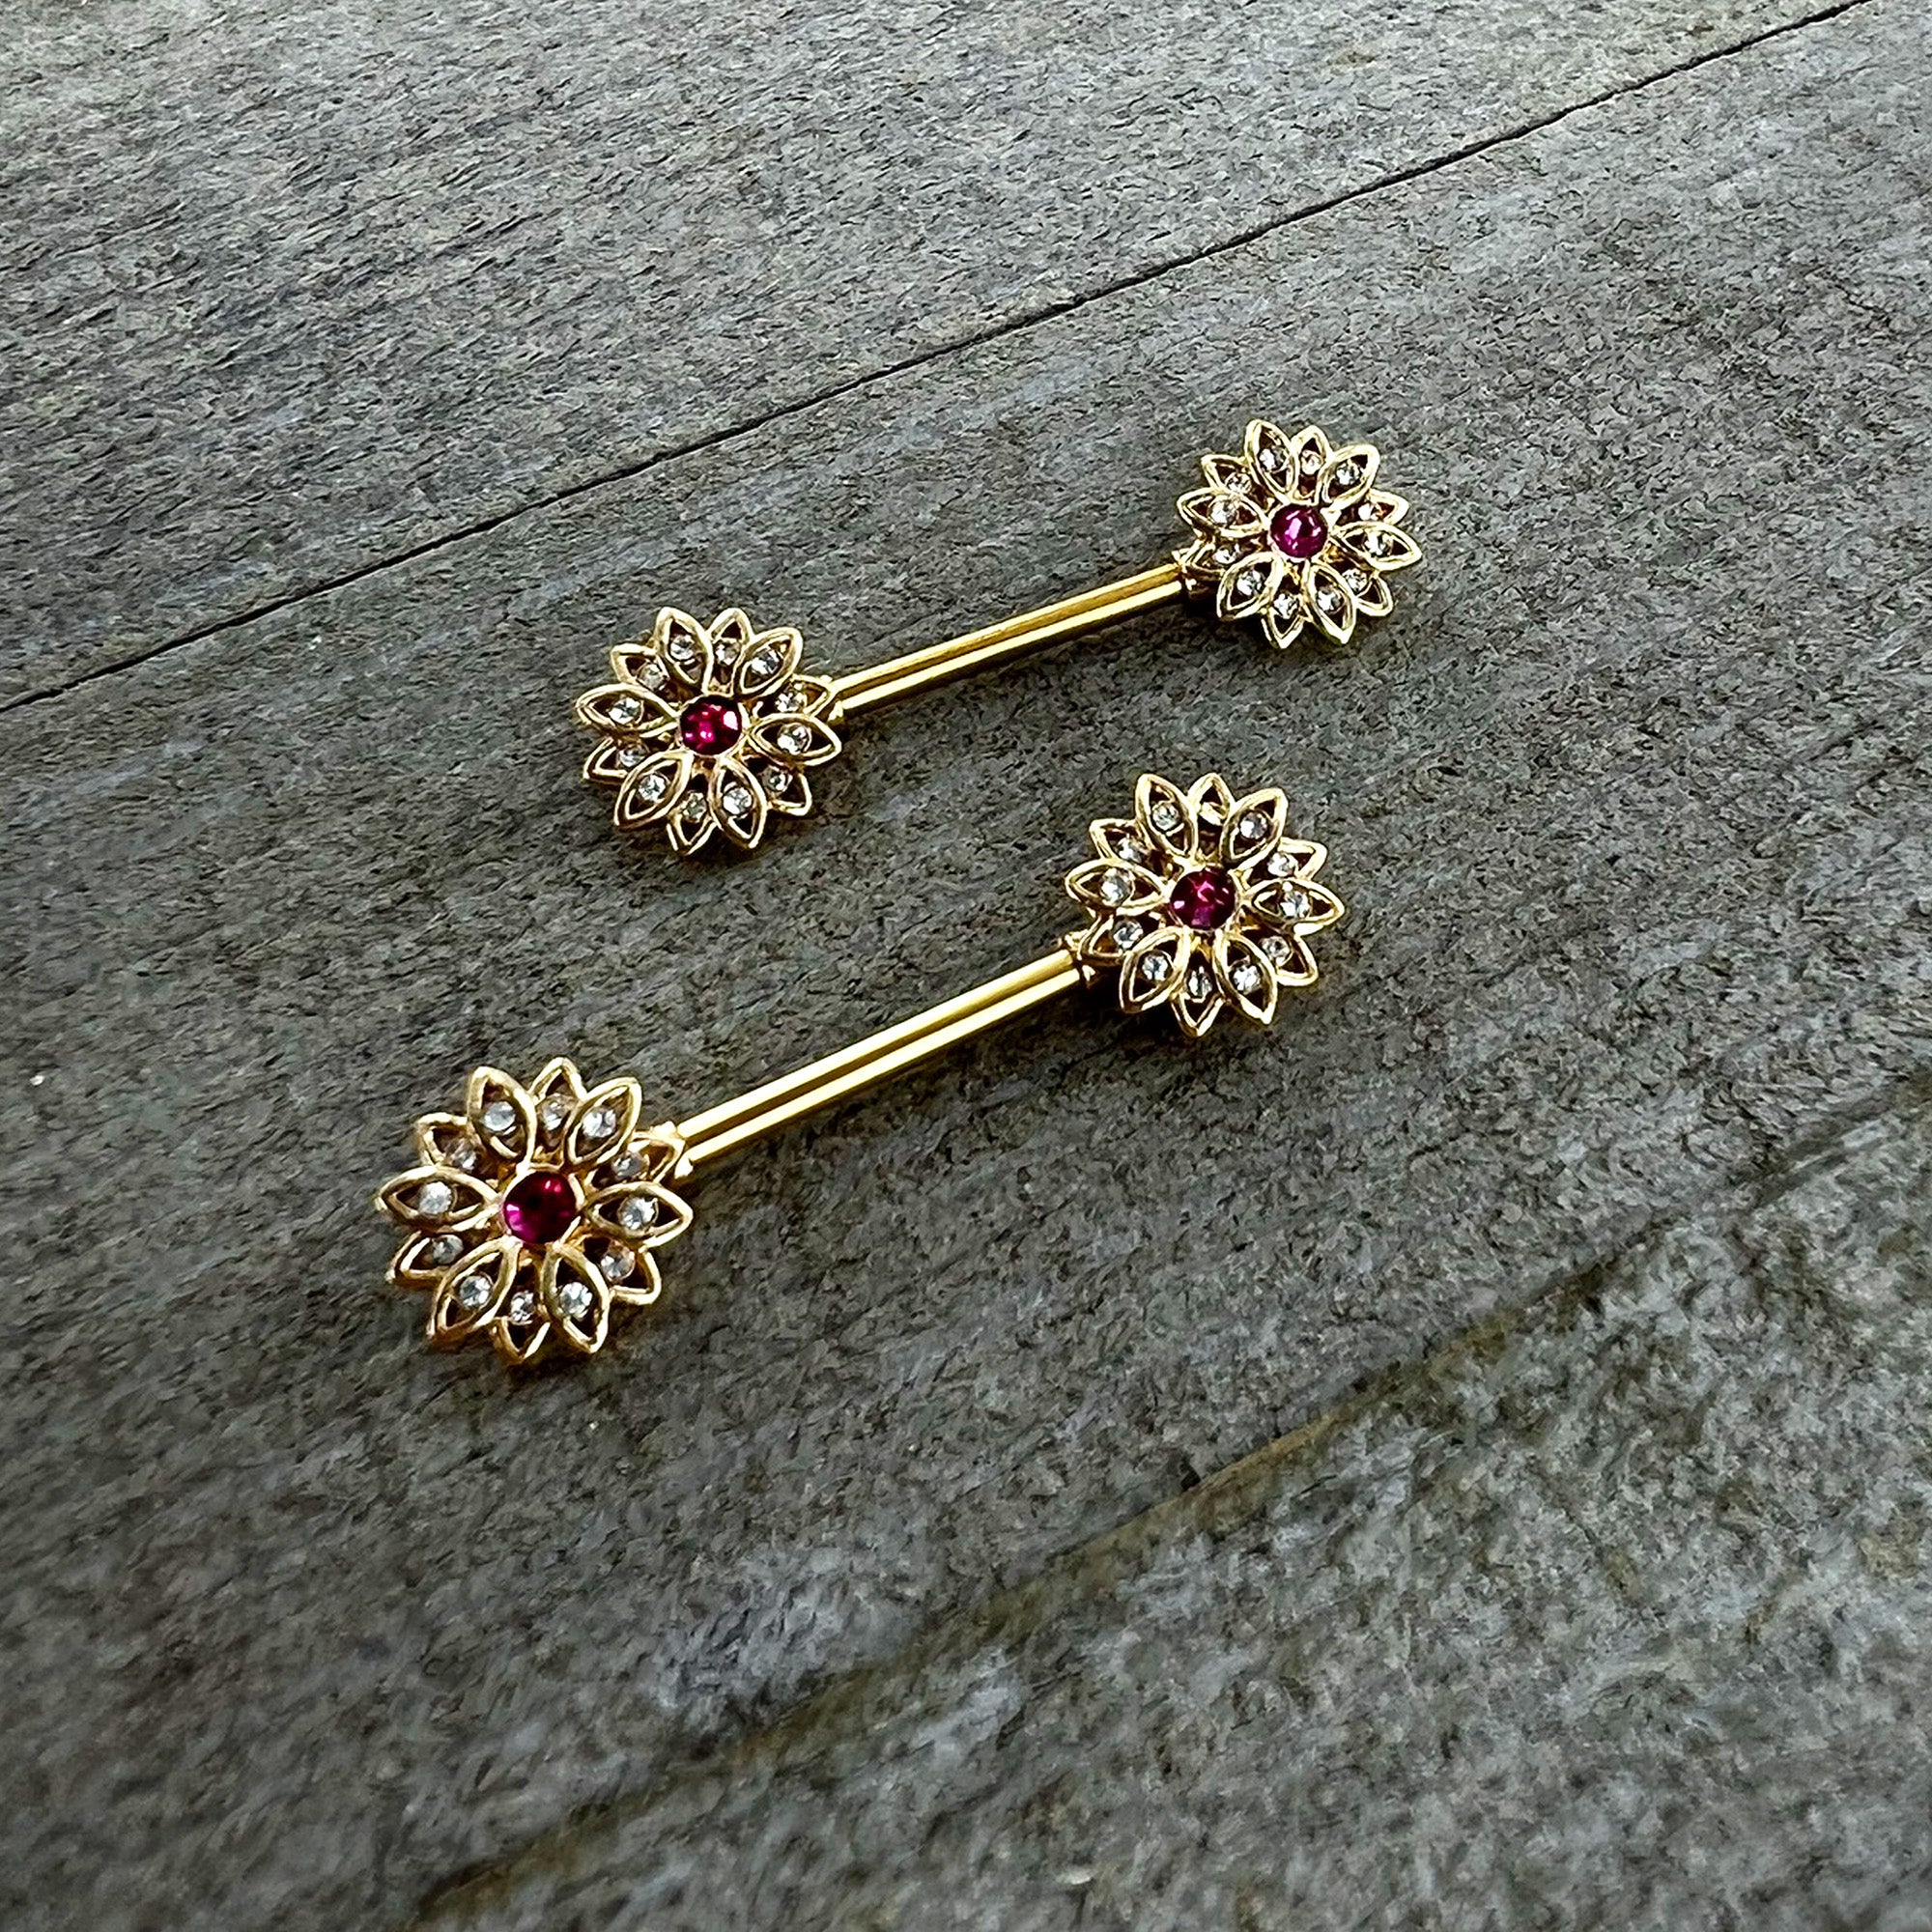 14 Gauge 9/16 Clear Pink Gem Gold Tone Starry Flower Nipple Ring Set